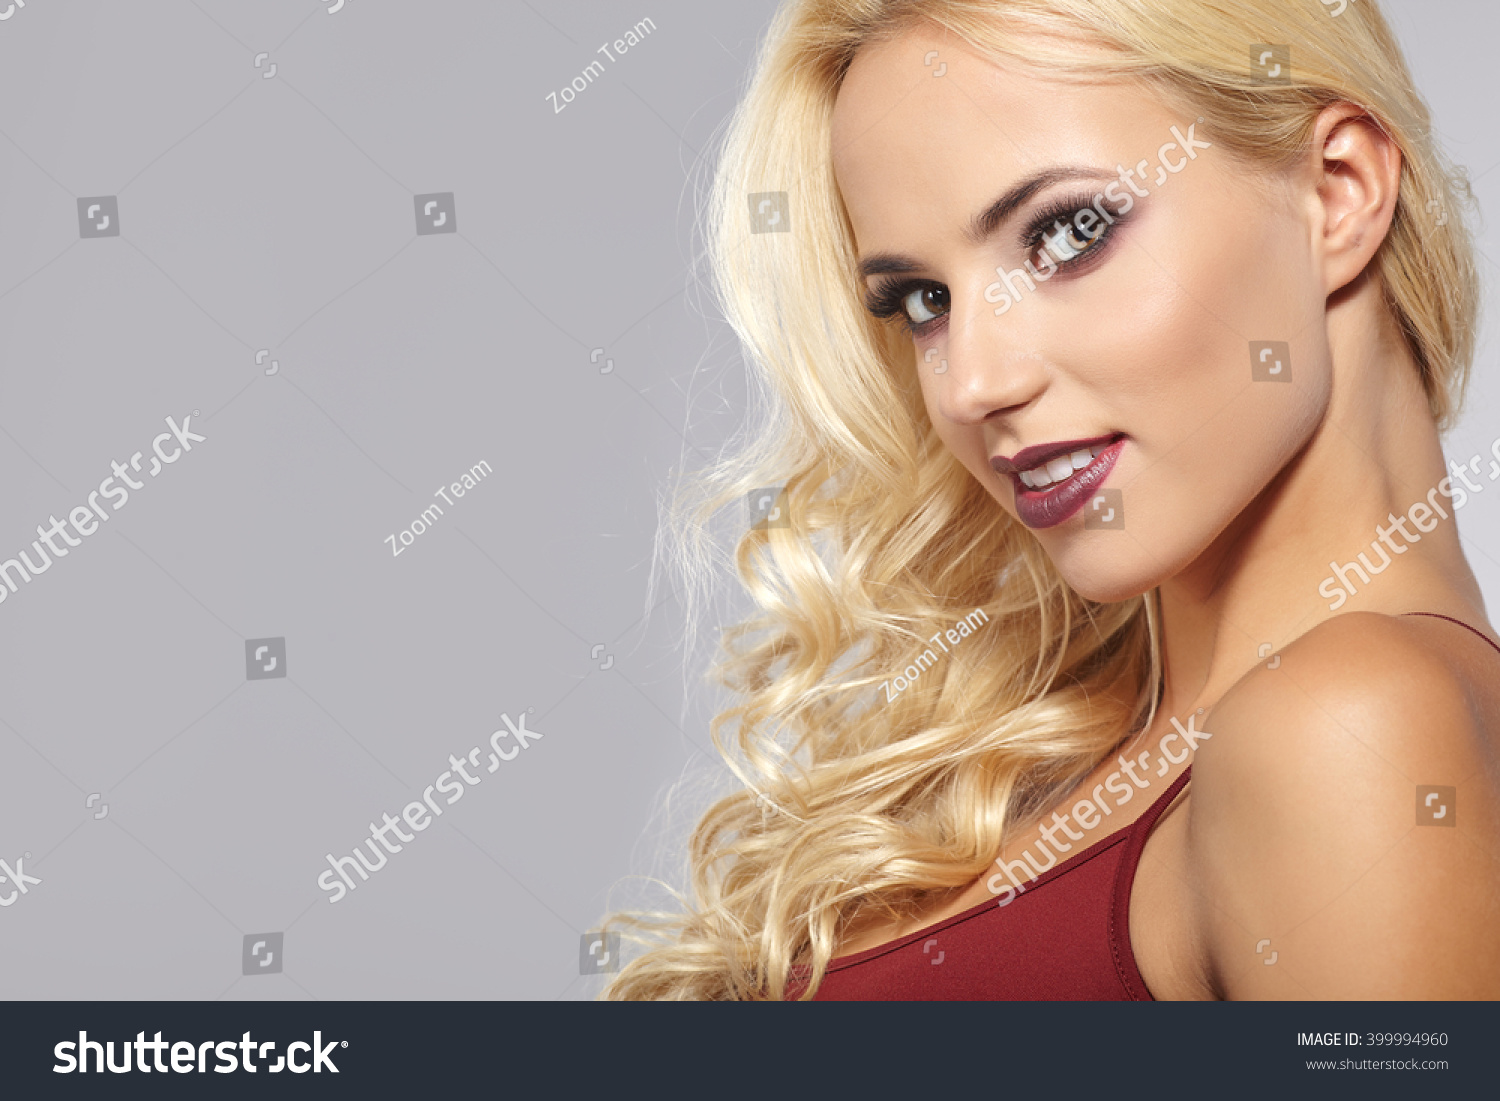 Portrait of beautiful blond woman #399994960